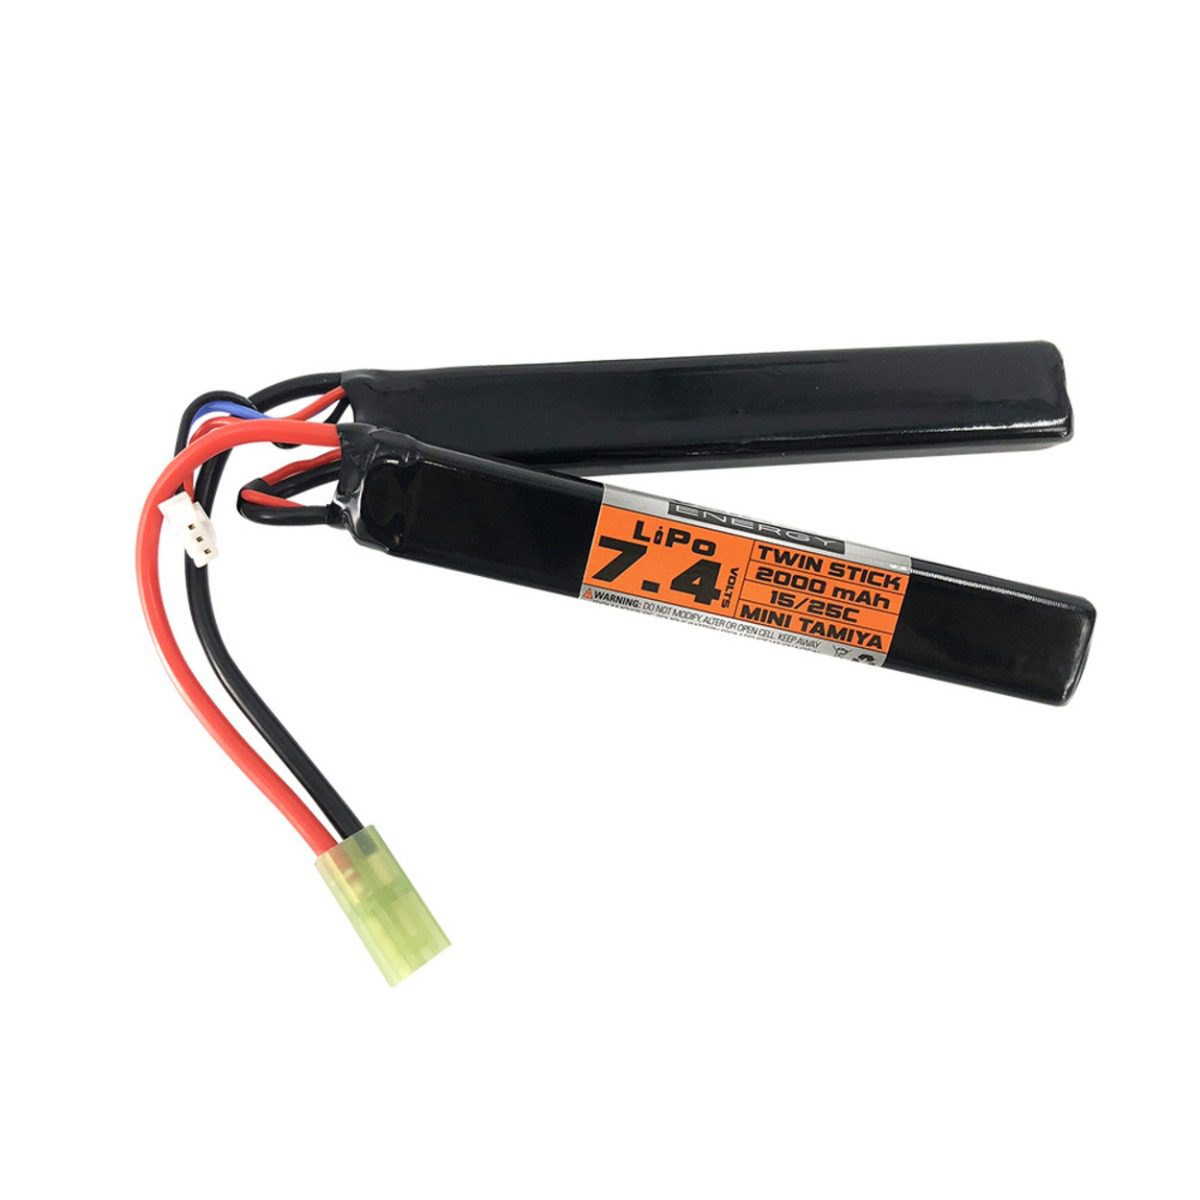 Valken Battery LiPo 7.4V 2000mAh 15/25c Twin Stick